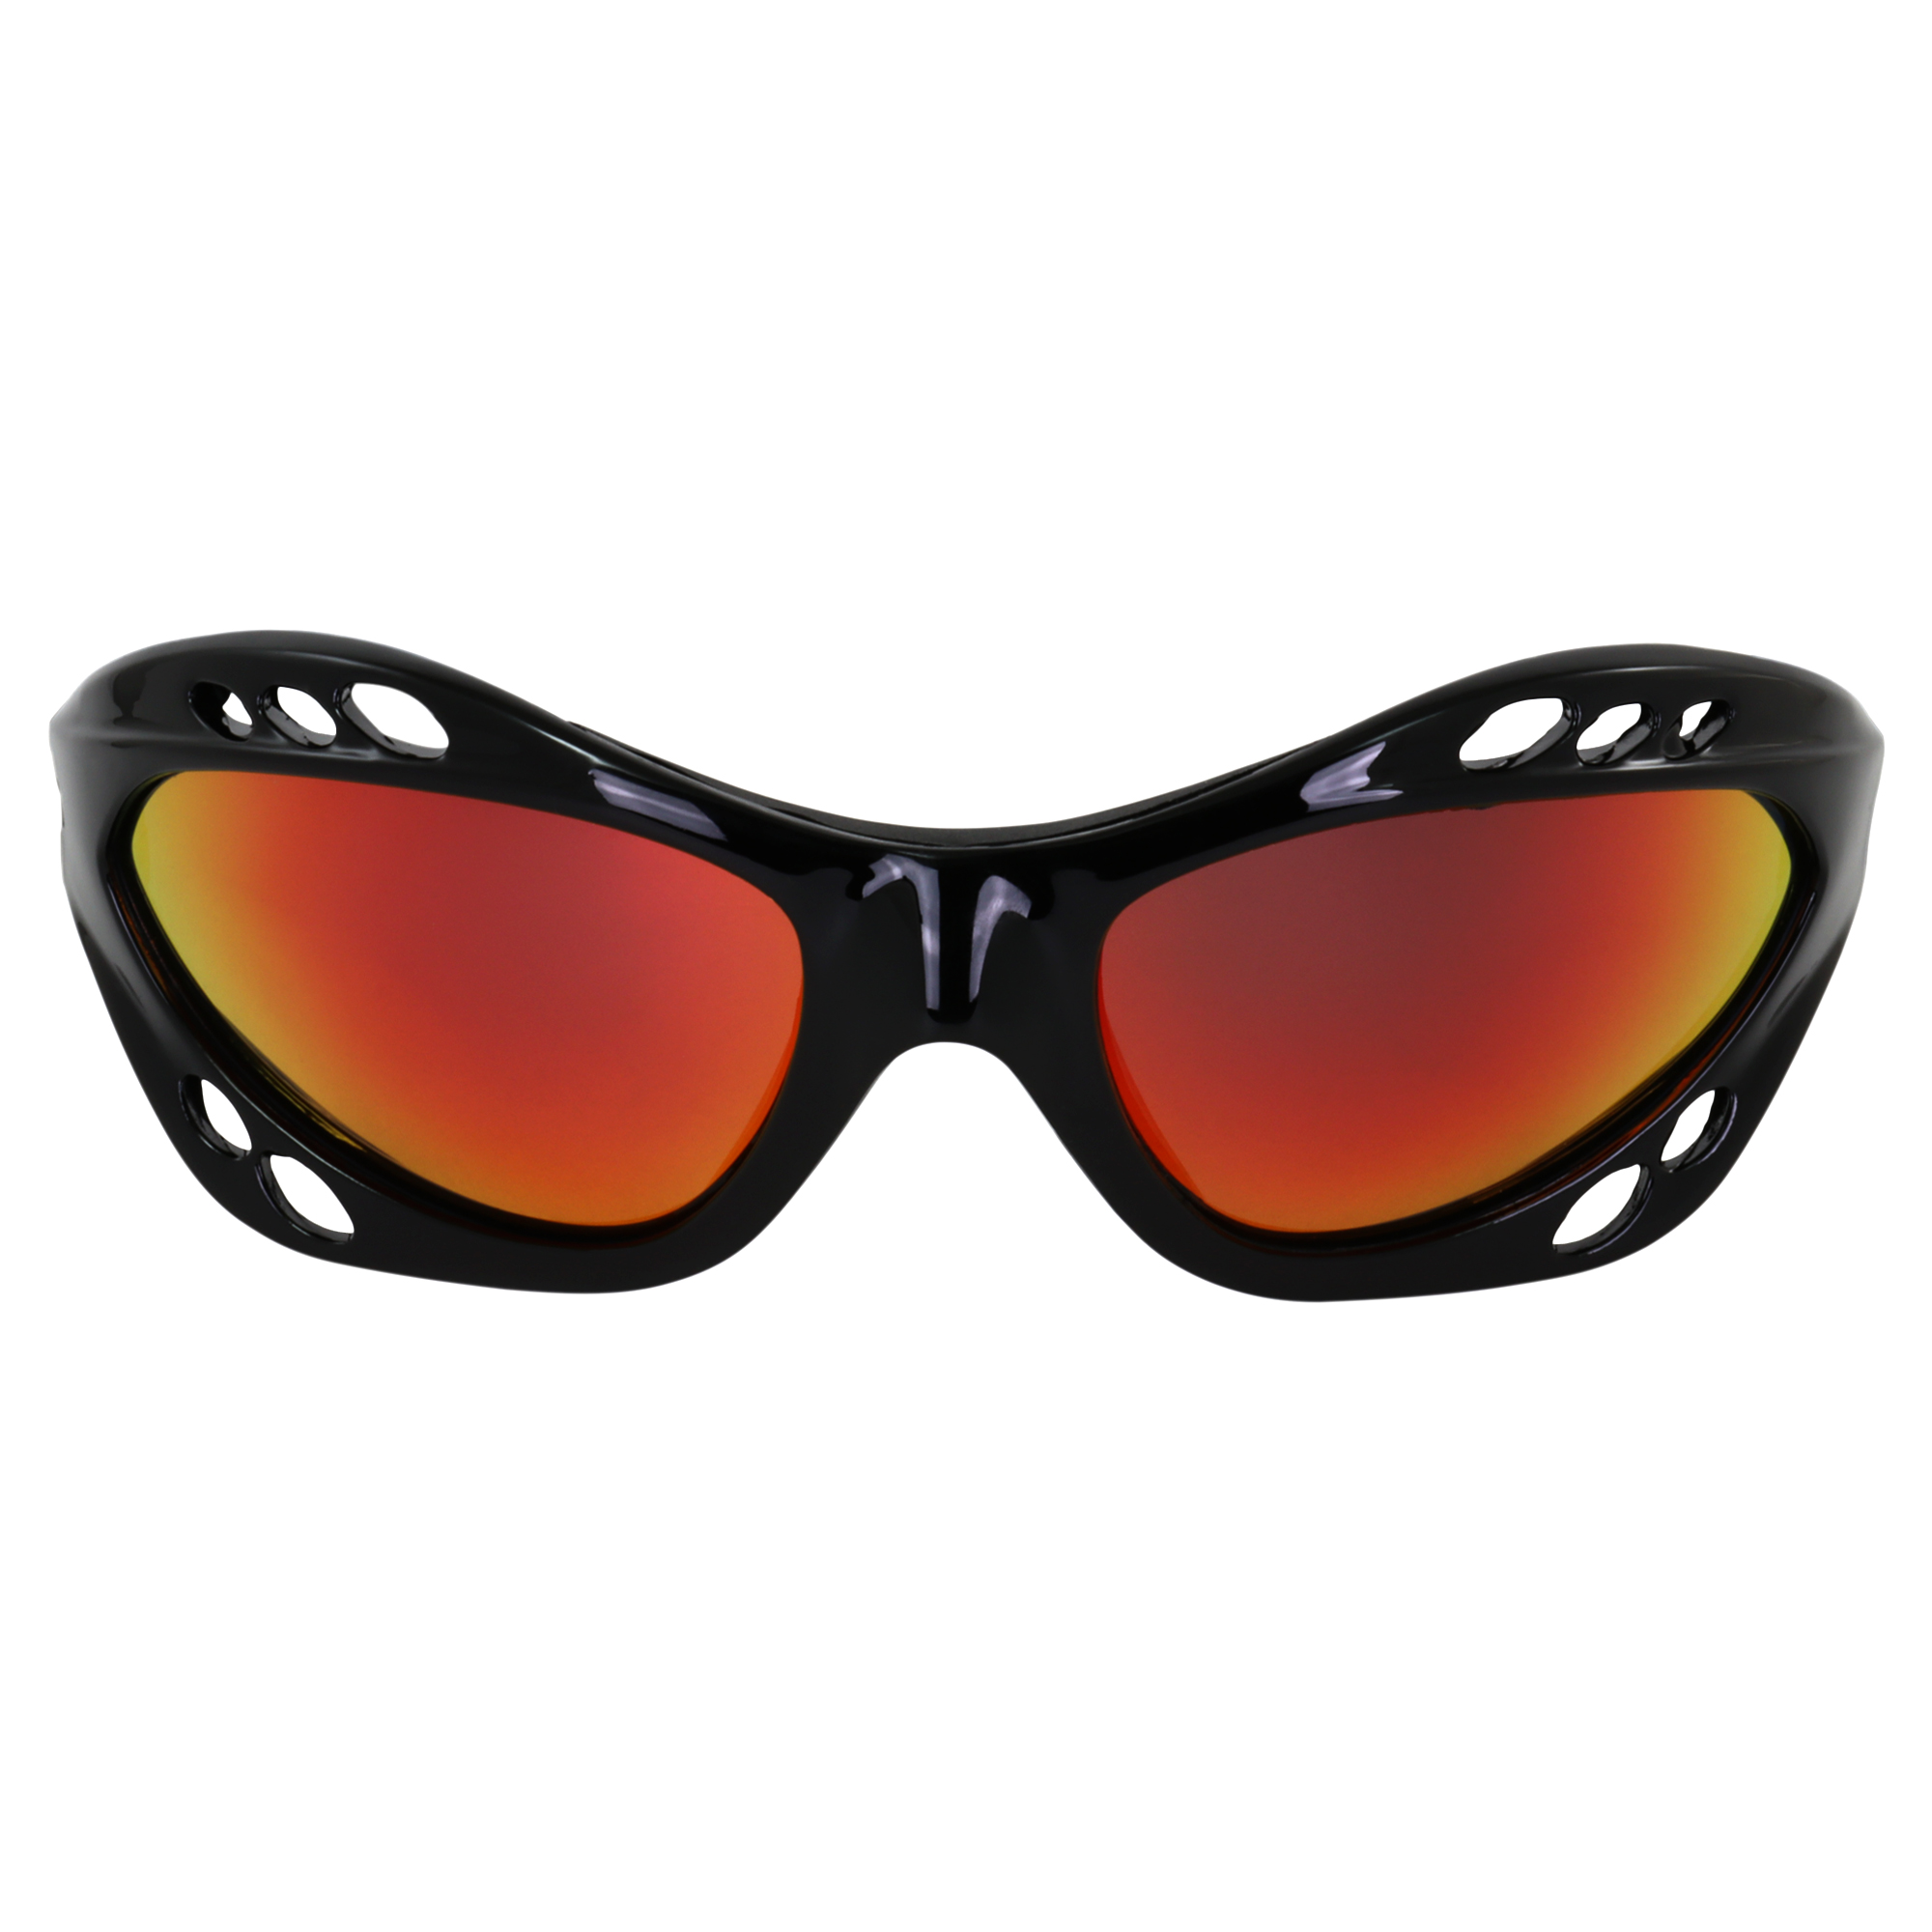 3 Pairs Birdz Seahawk Padded Polarized Sunglasses w/Strap Water Sports Surfing Kayaking Jetski Silver Frame w/Smoke Lens & Black Frame w/ Red & Green Mirror Lenses - image 4 of 7